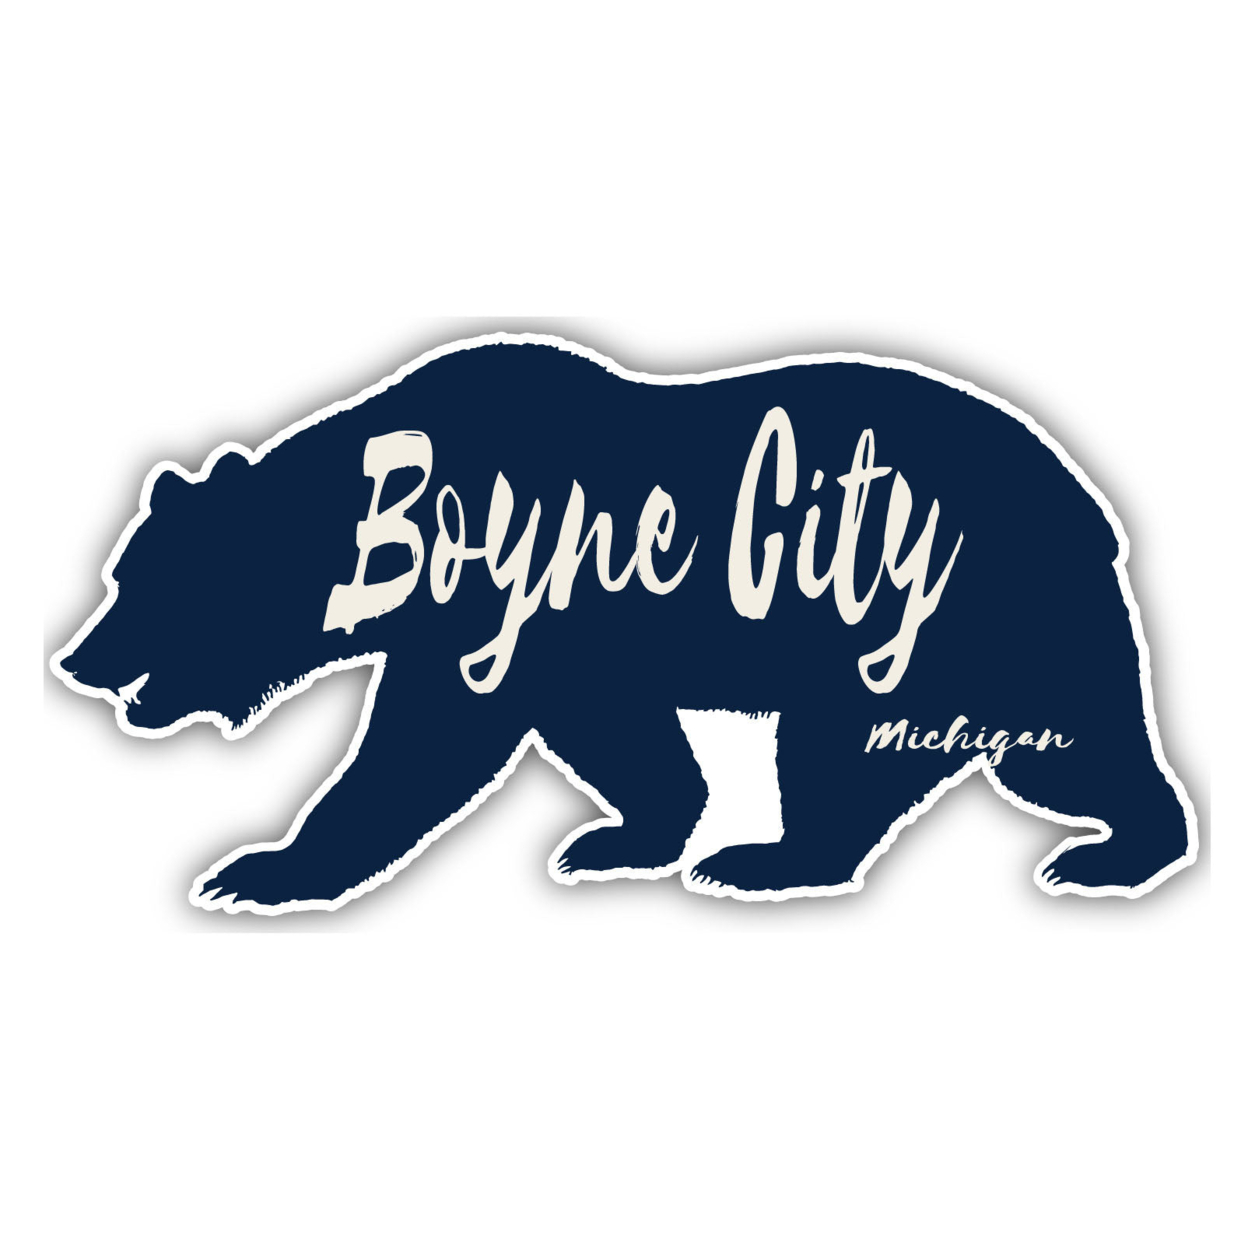 Boyne City Michigan Souvenir Decorative Stickers (Choose Theme And Size) - 4-Pack, 10-Inch, Tent